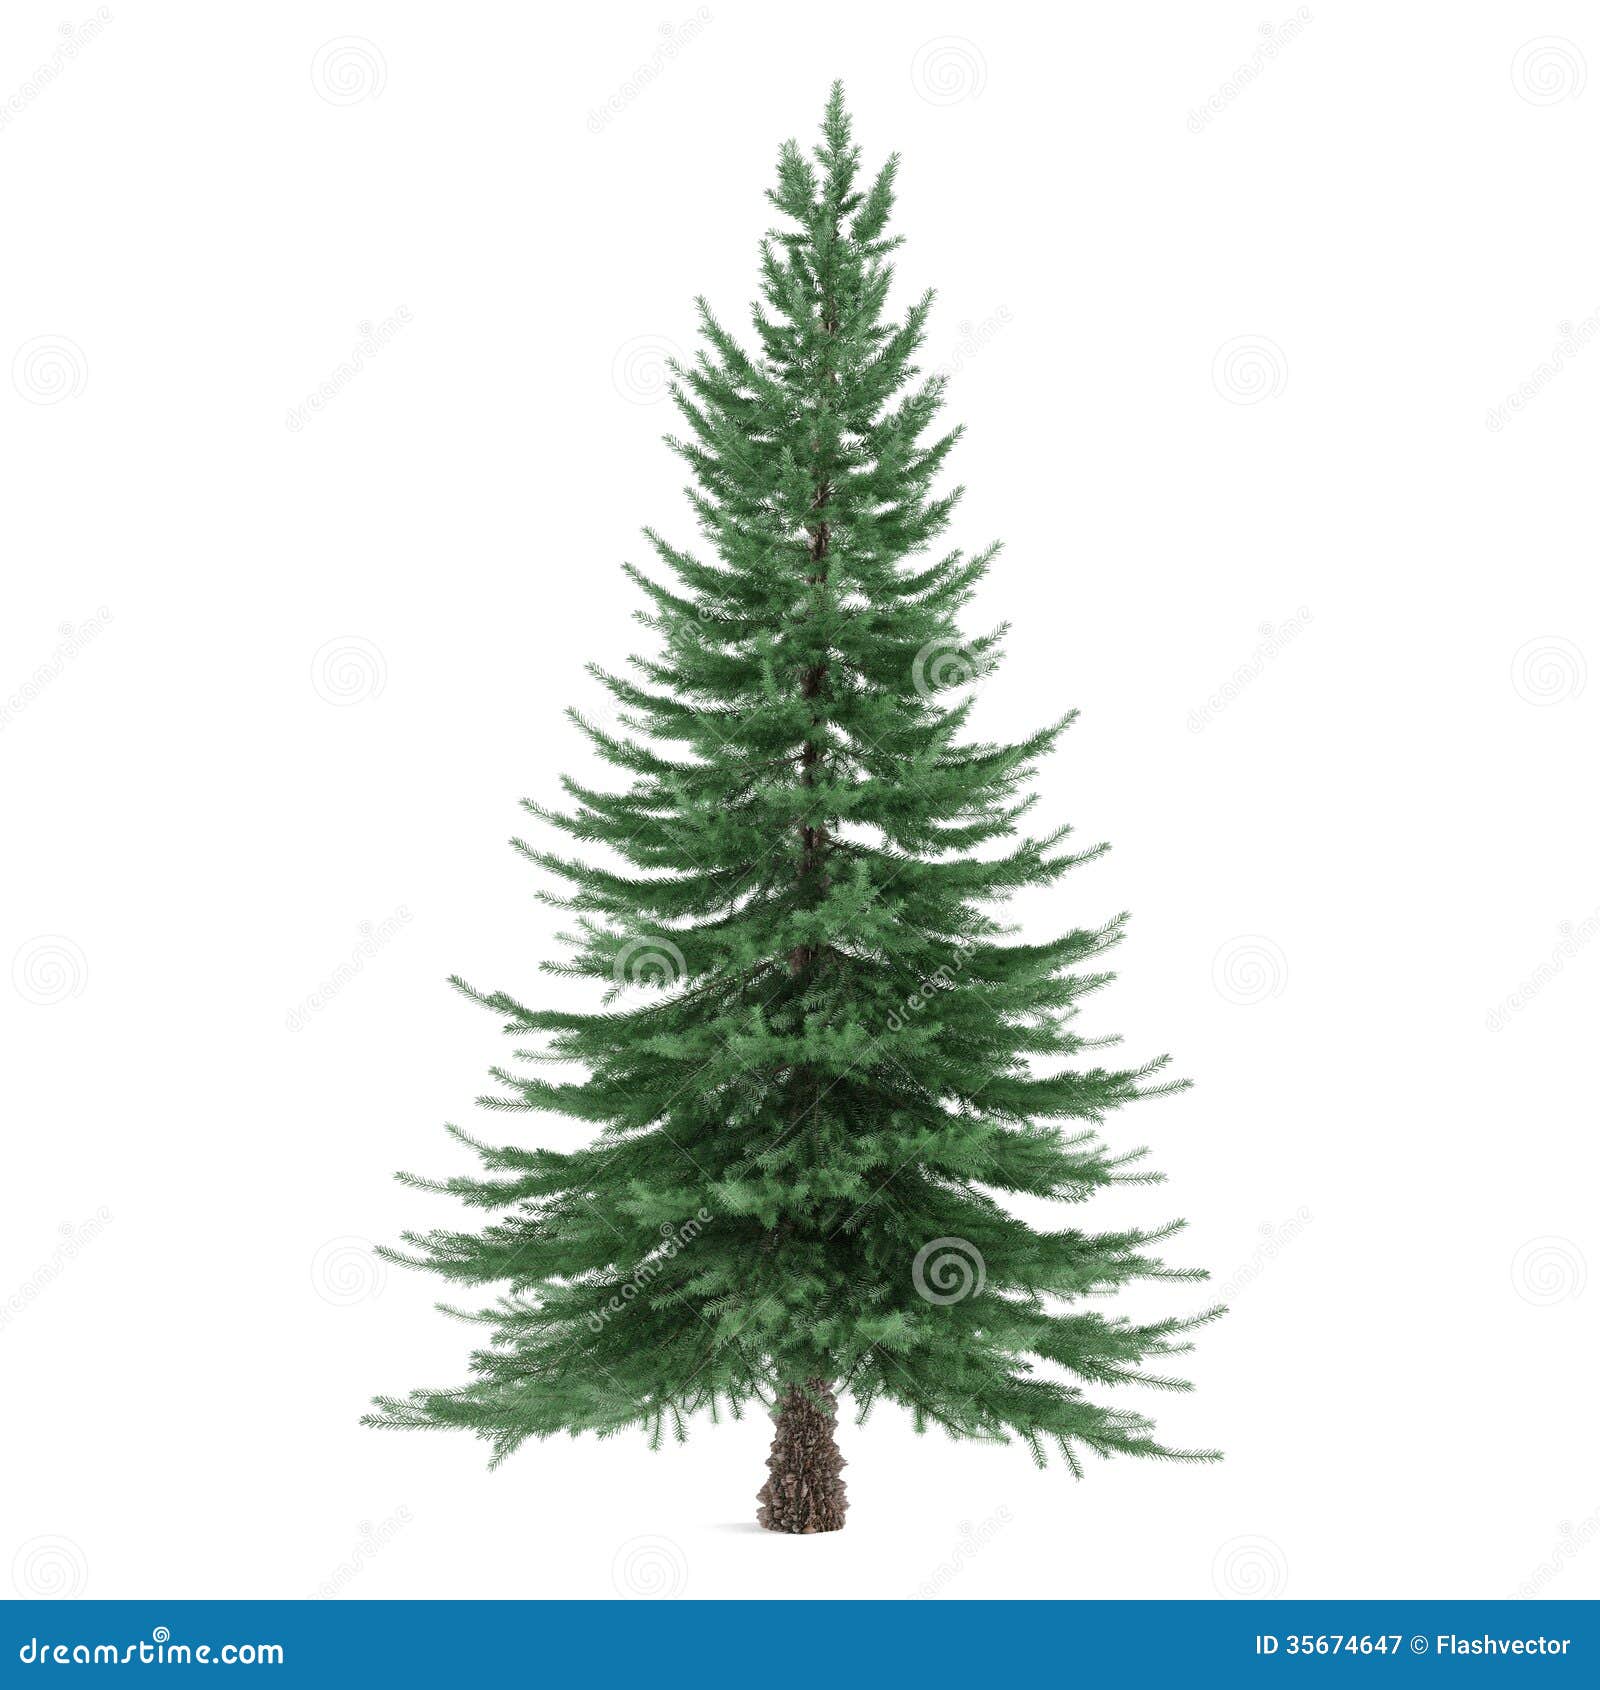 clipart spruce tree - photo #8